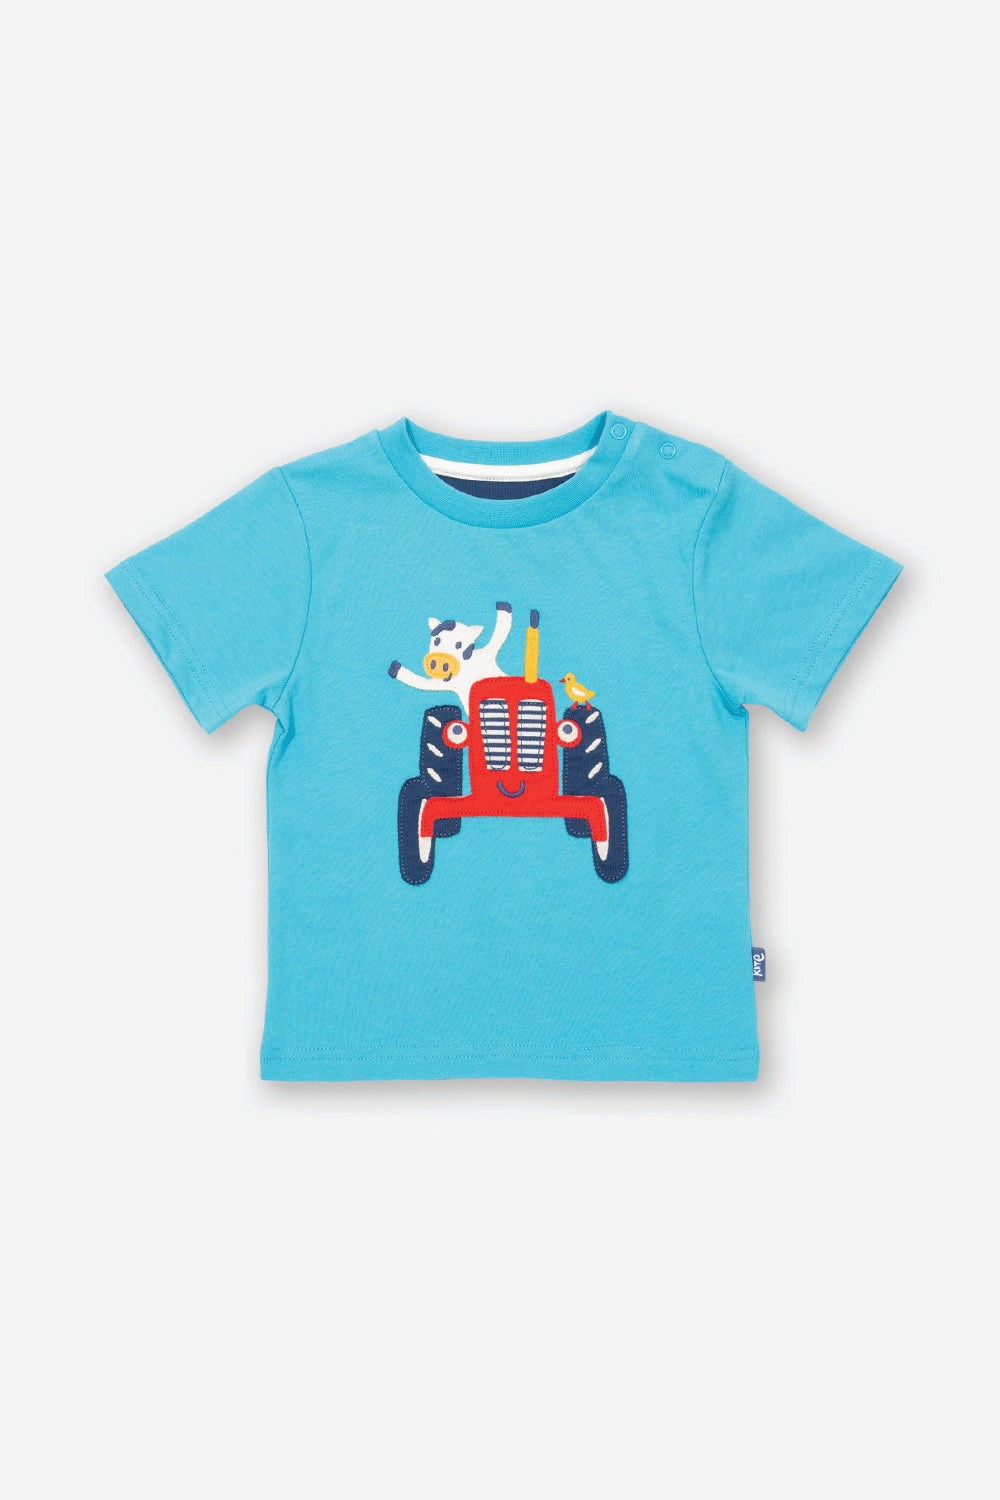 Tractor Baby/Kids T-Shirt -